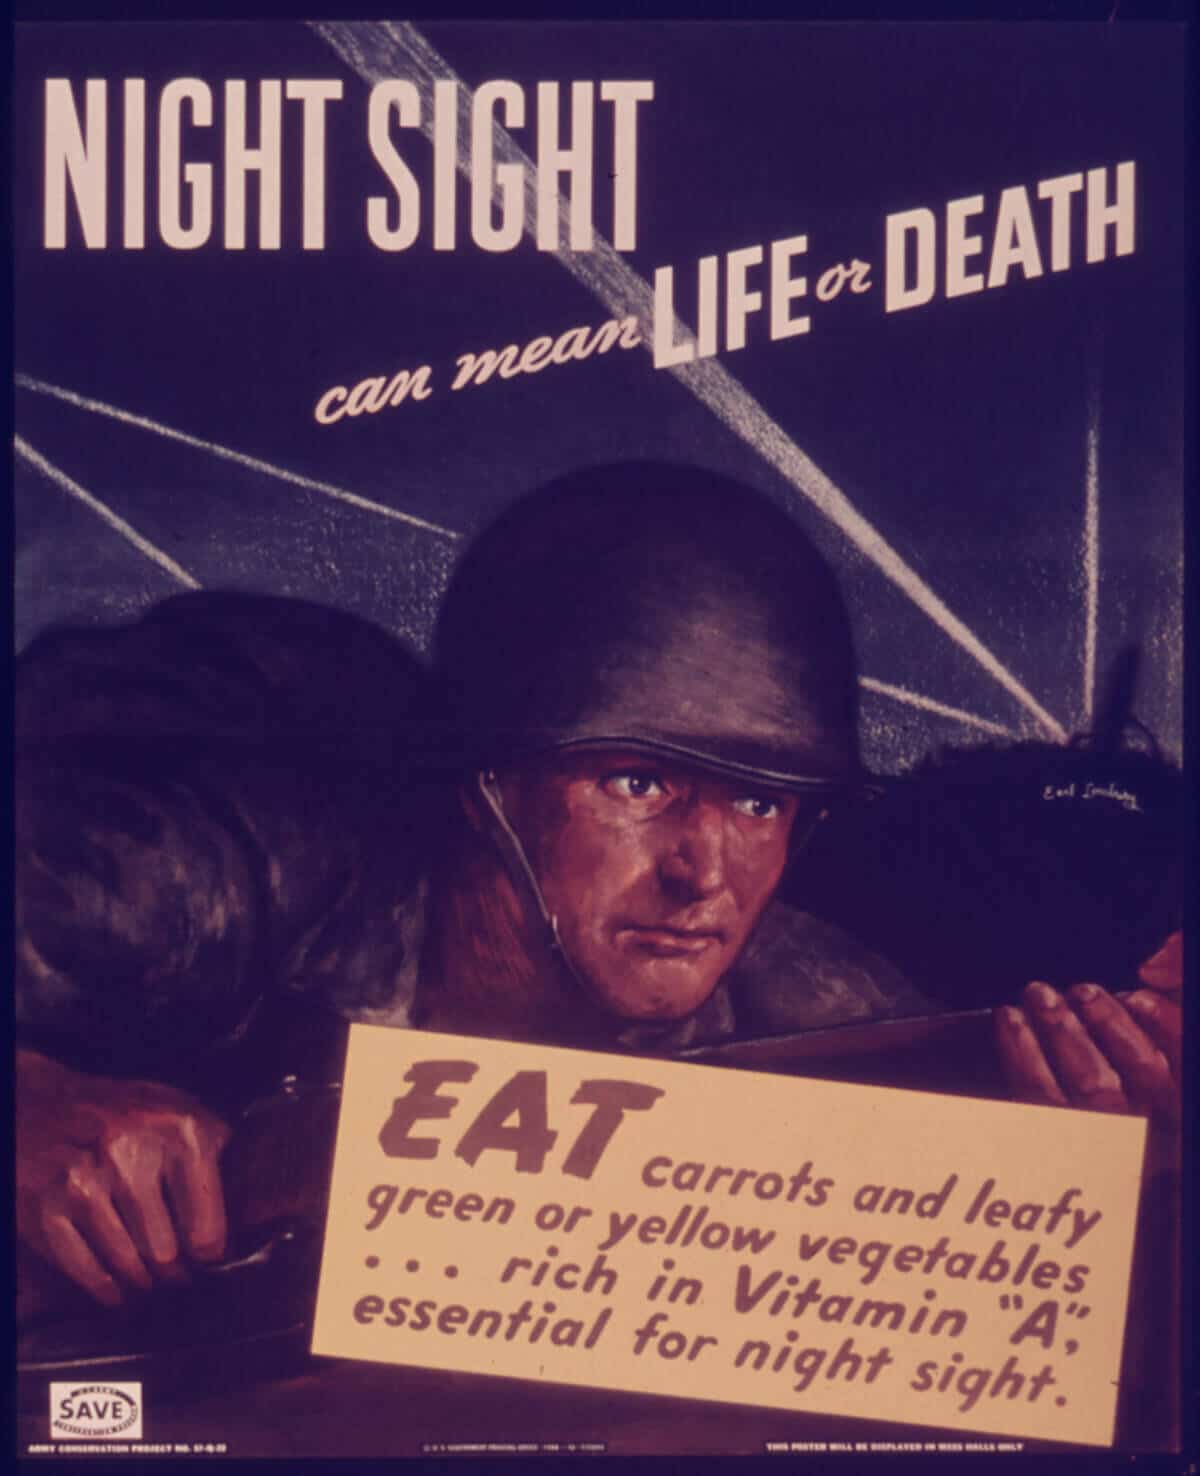 World War II British propaganda claimed carrots improve eyesight